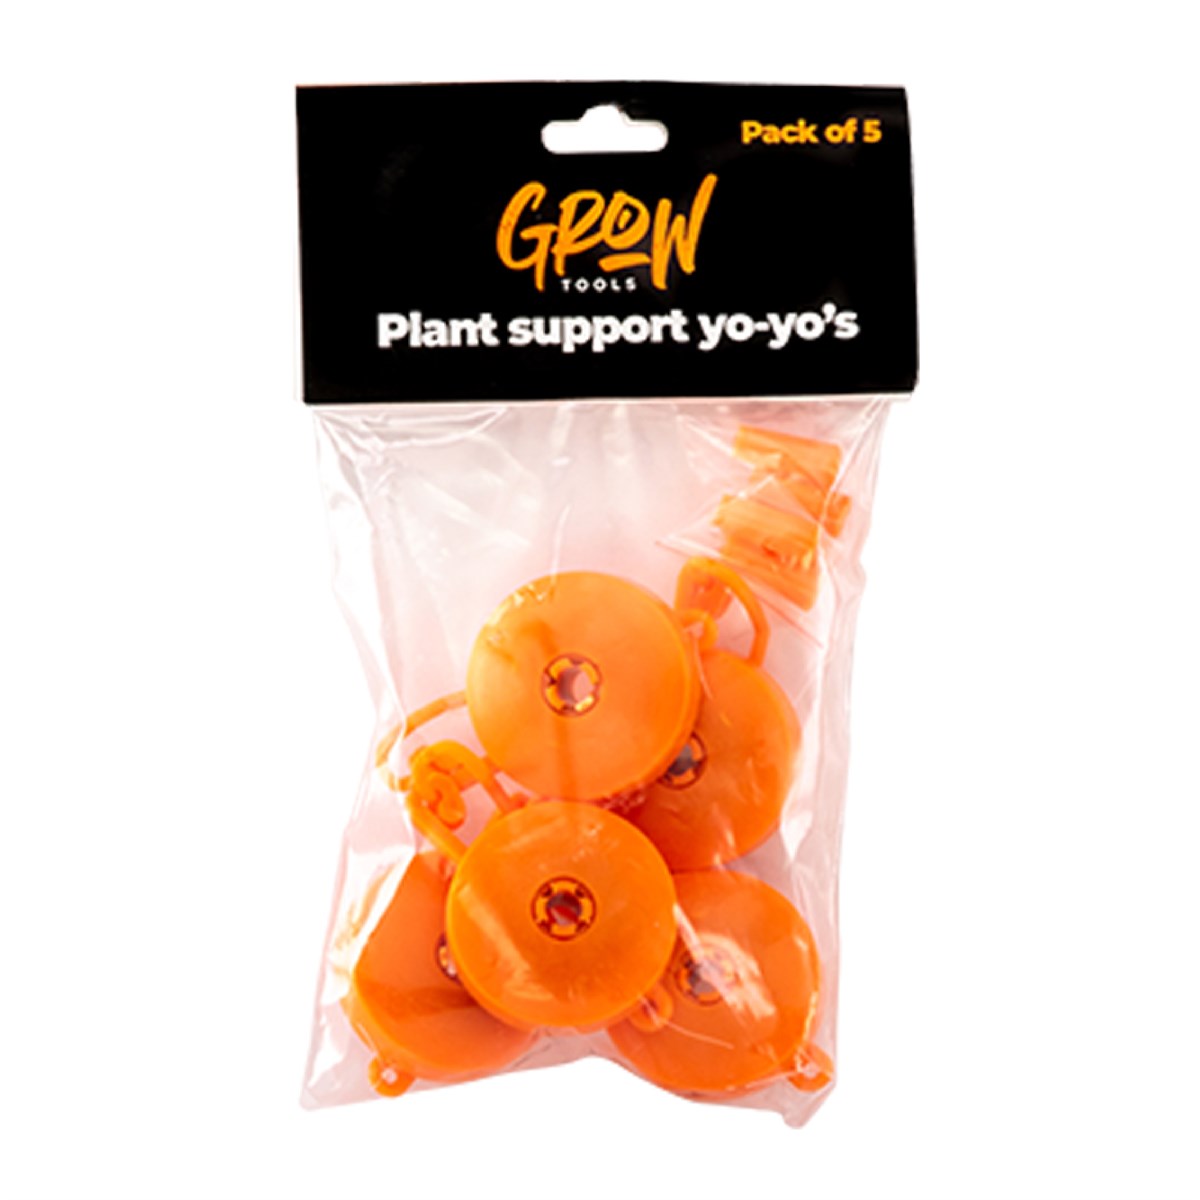 Grow Tools Plant Support Yo-Yo's